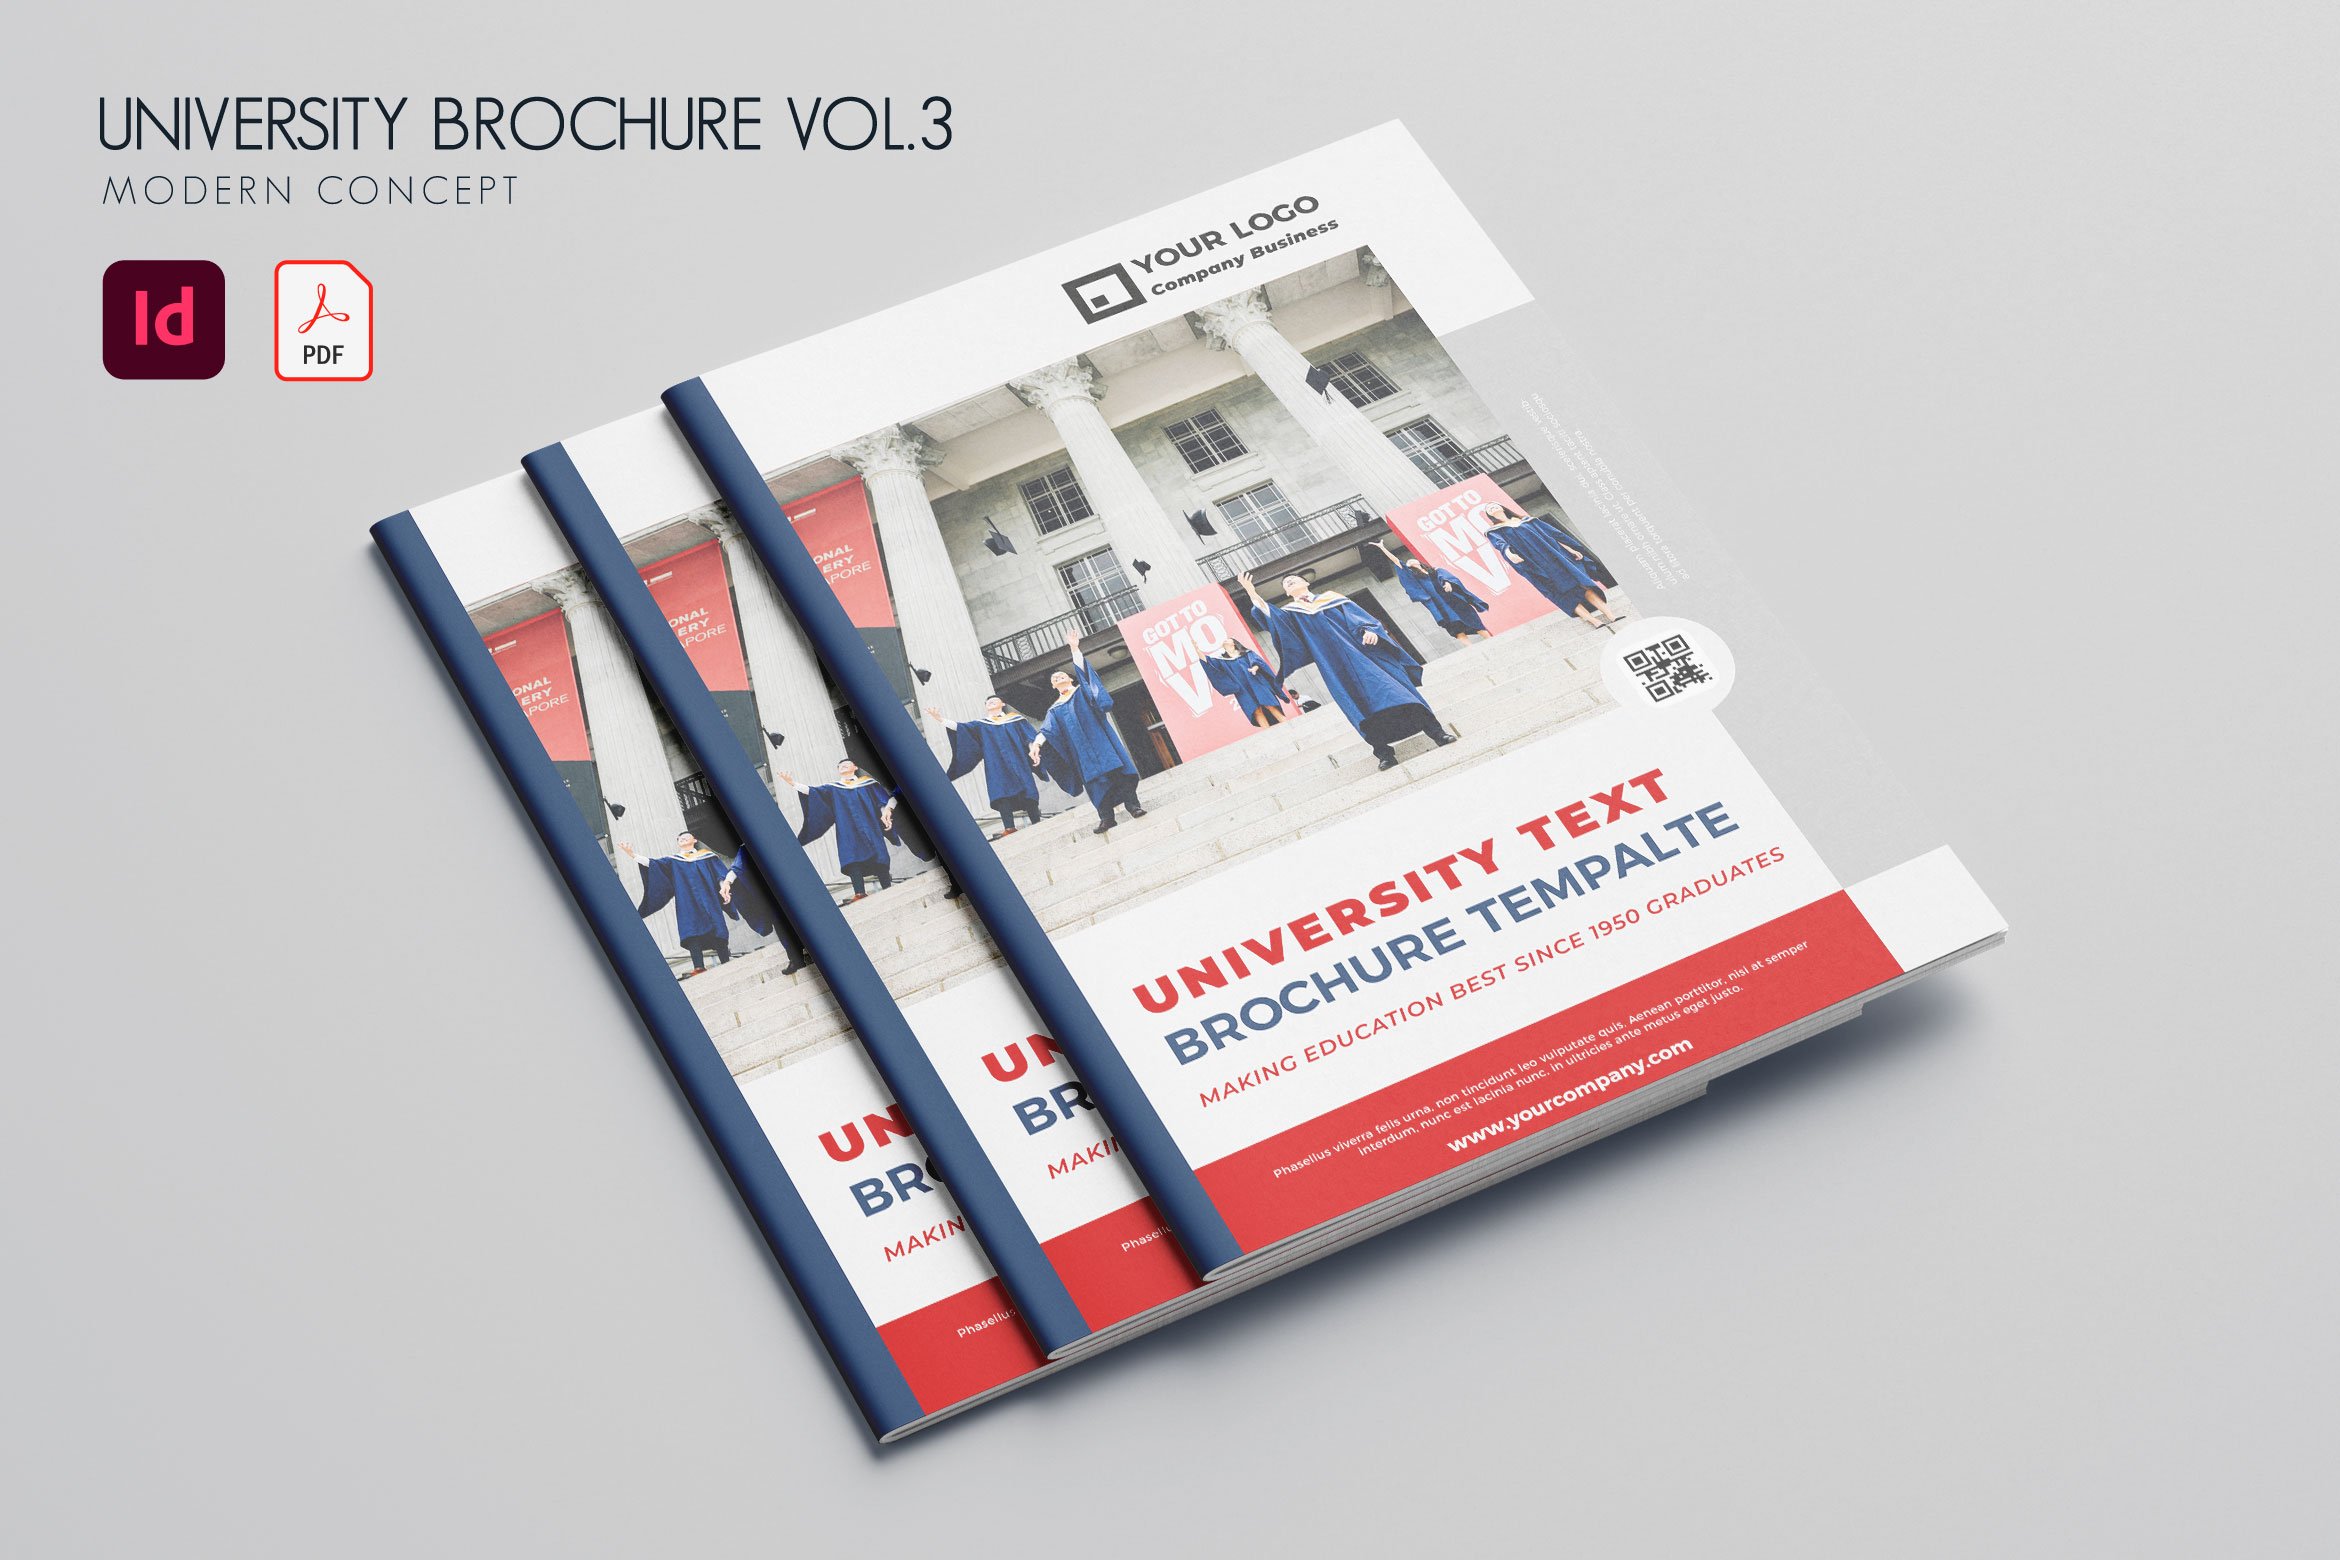 University Brochure Vol.3 cover image.